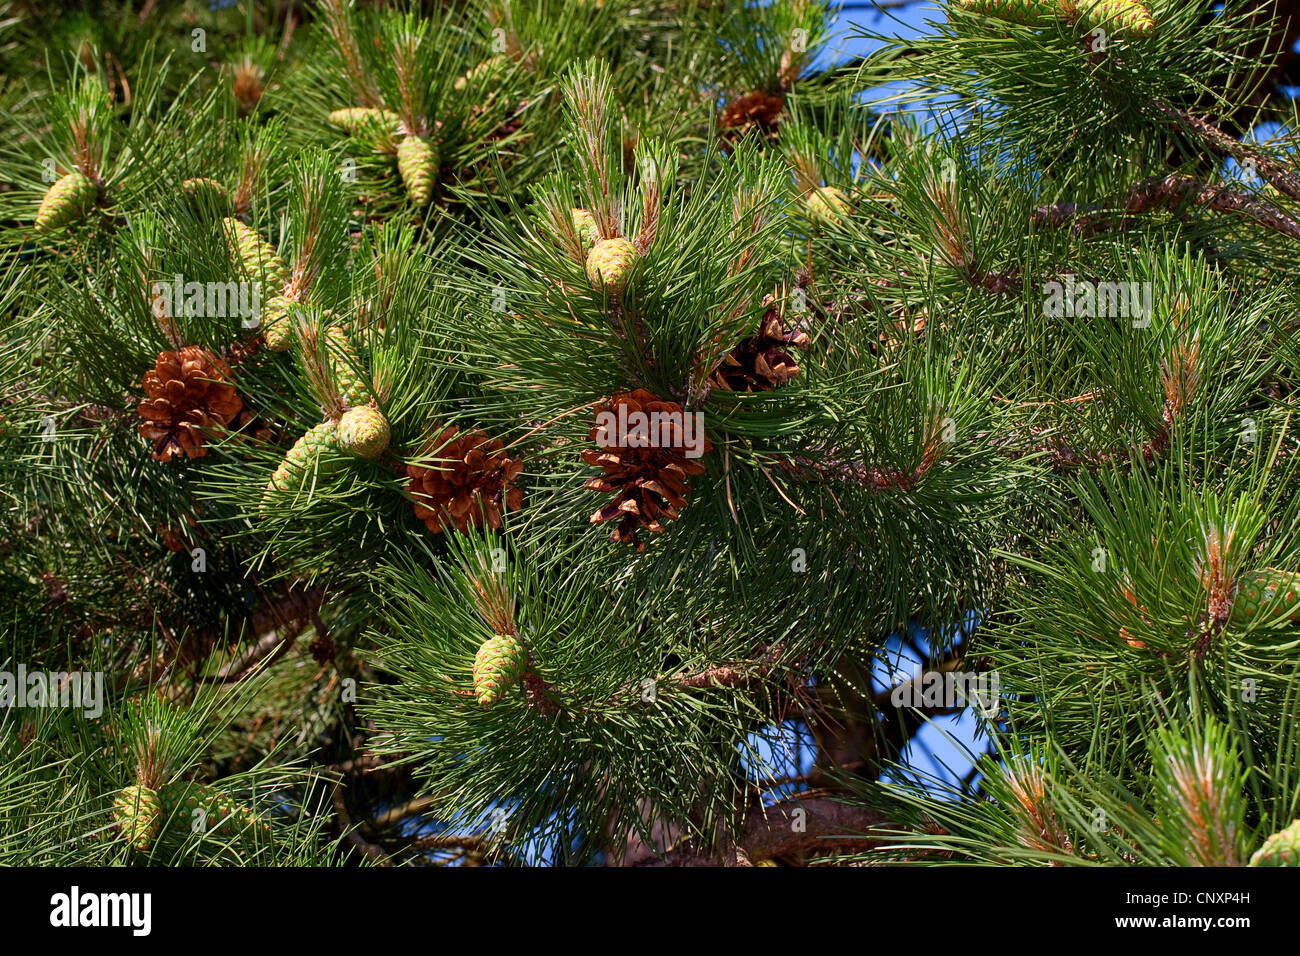 European black pine, Austrian pine, Black Pine, Corsican Pine (Pinus nigra), branches with young an ripe cone Stock Photo